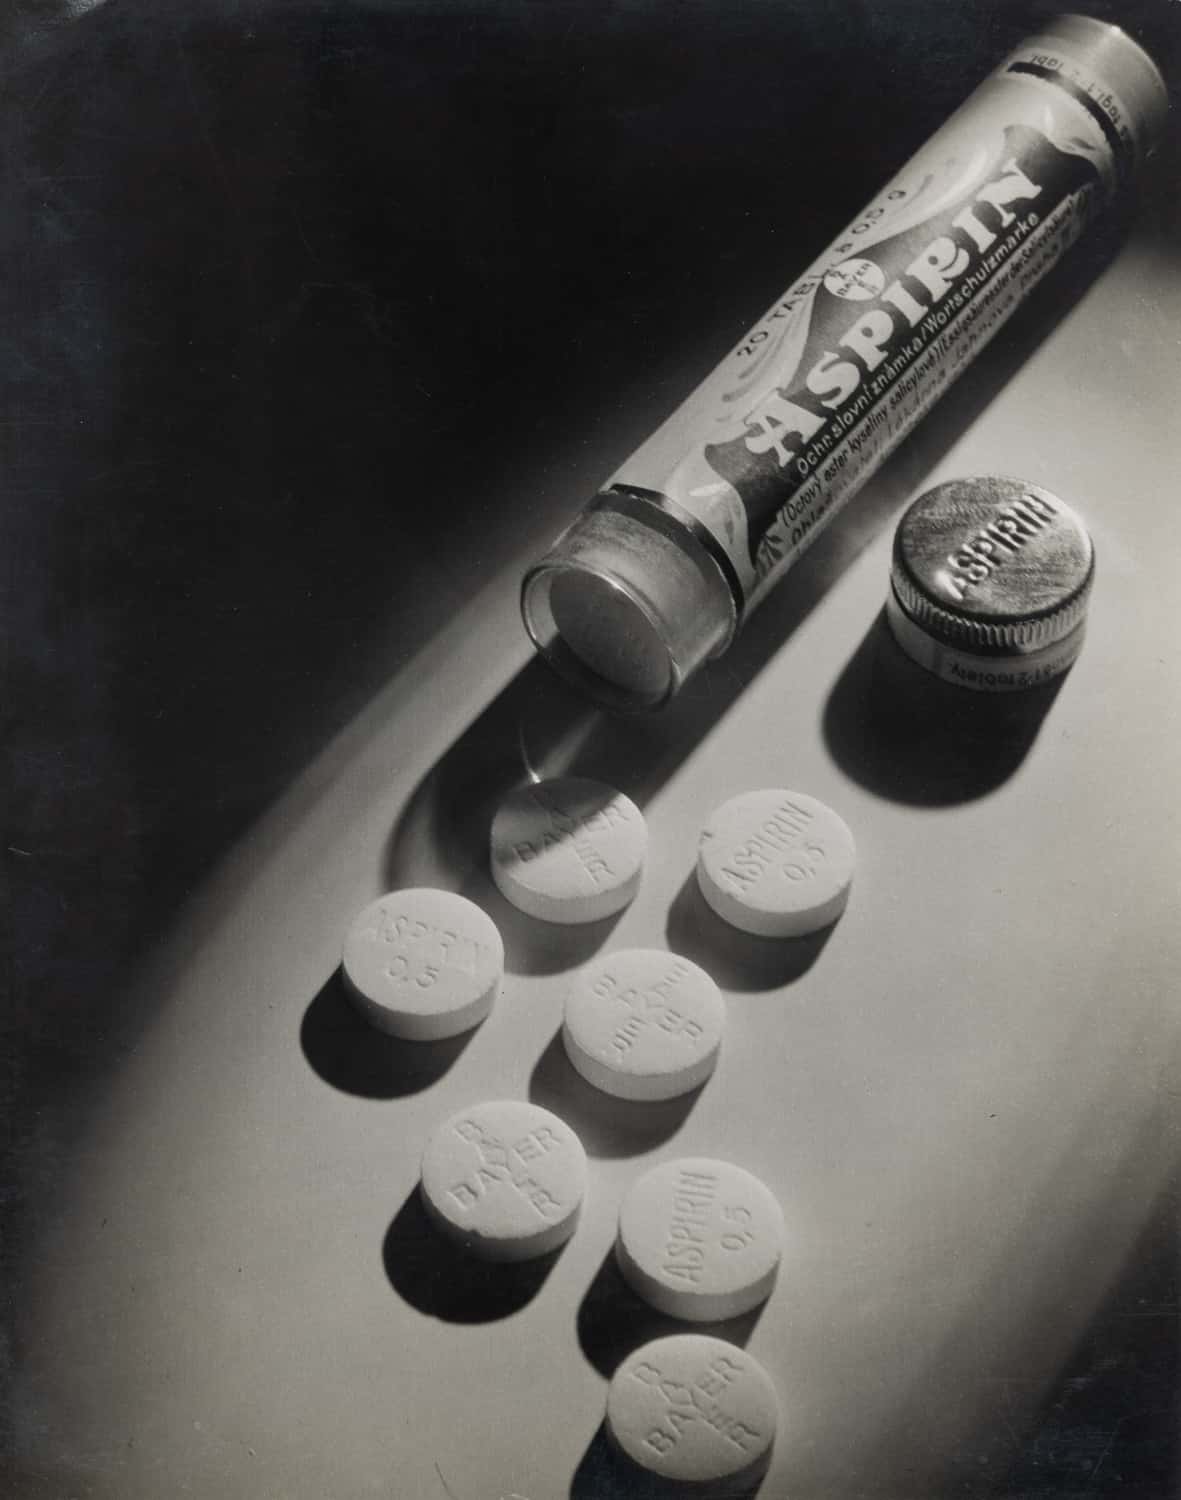 Jaroslav Rössler, Bayer Aspirin, 1936. Modern Objects, Huxley-Parlour Gallery, 3–5 Swallow St, London, W1B 4DE